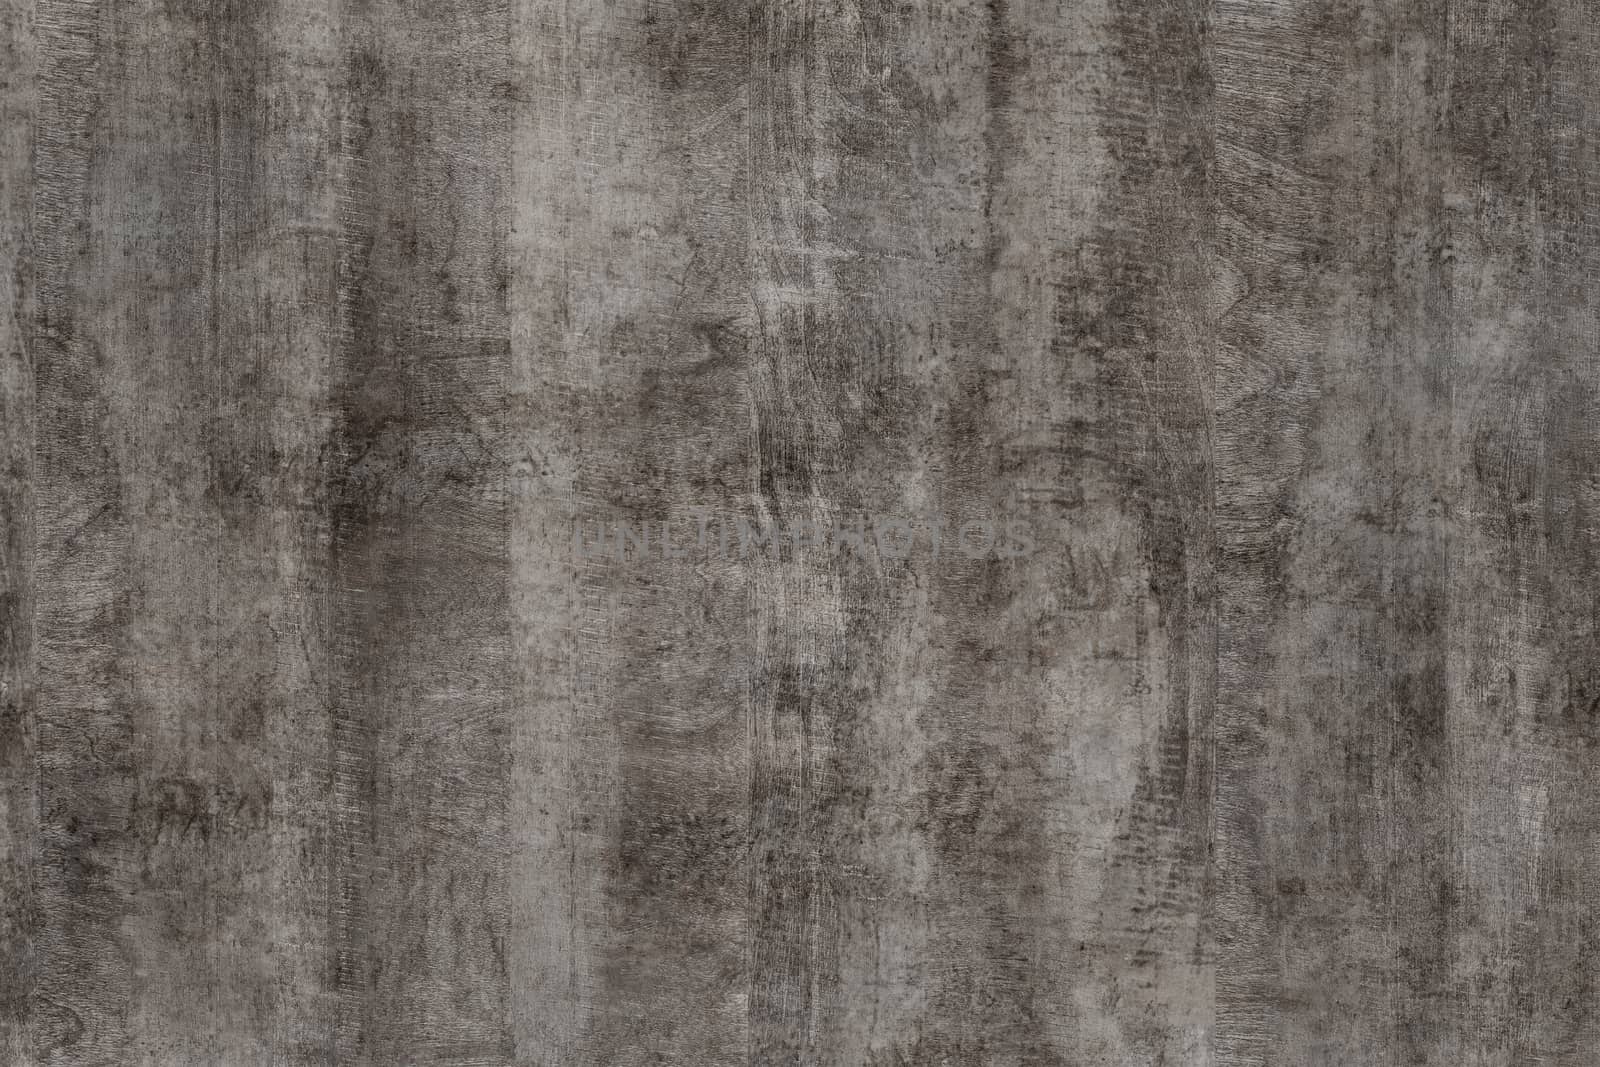 Concrete wall background texture, Gray concrete wall, abstract texture background by ivo_13